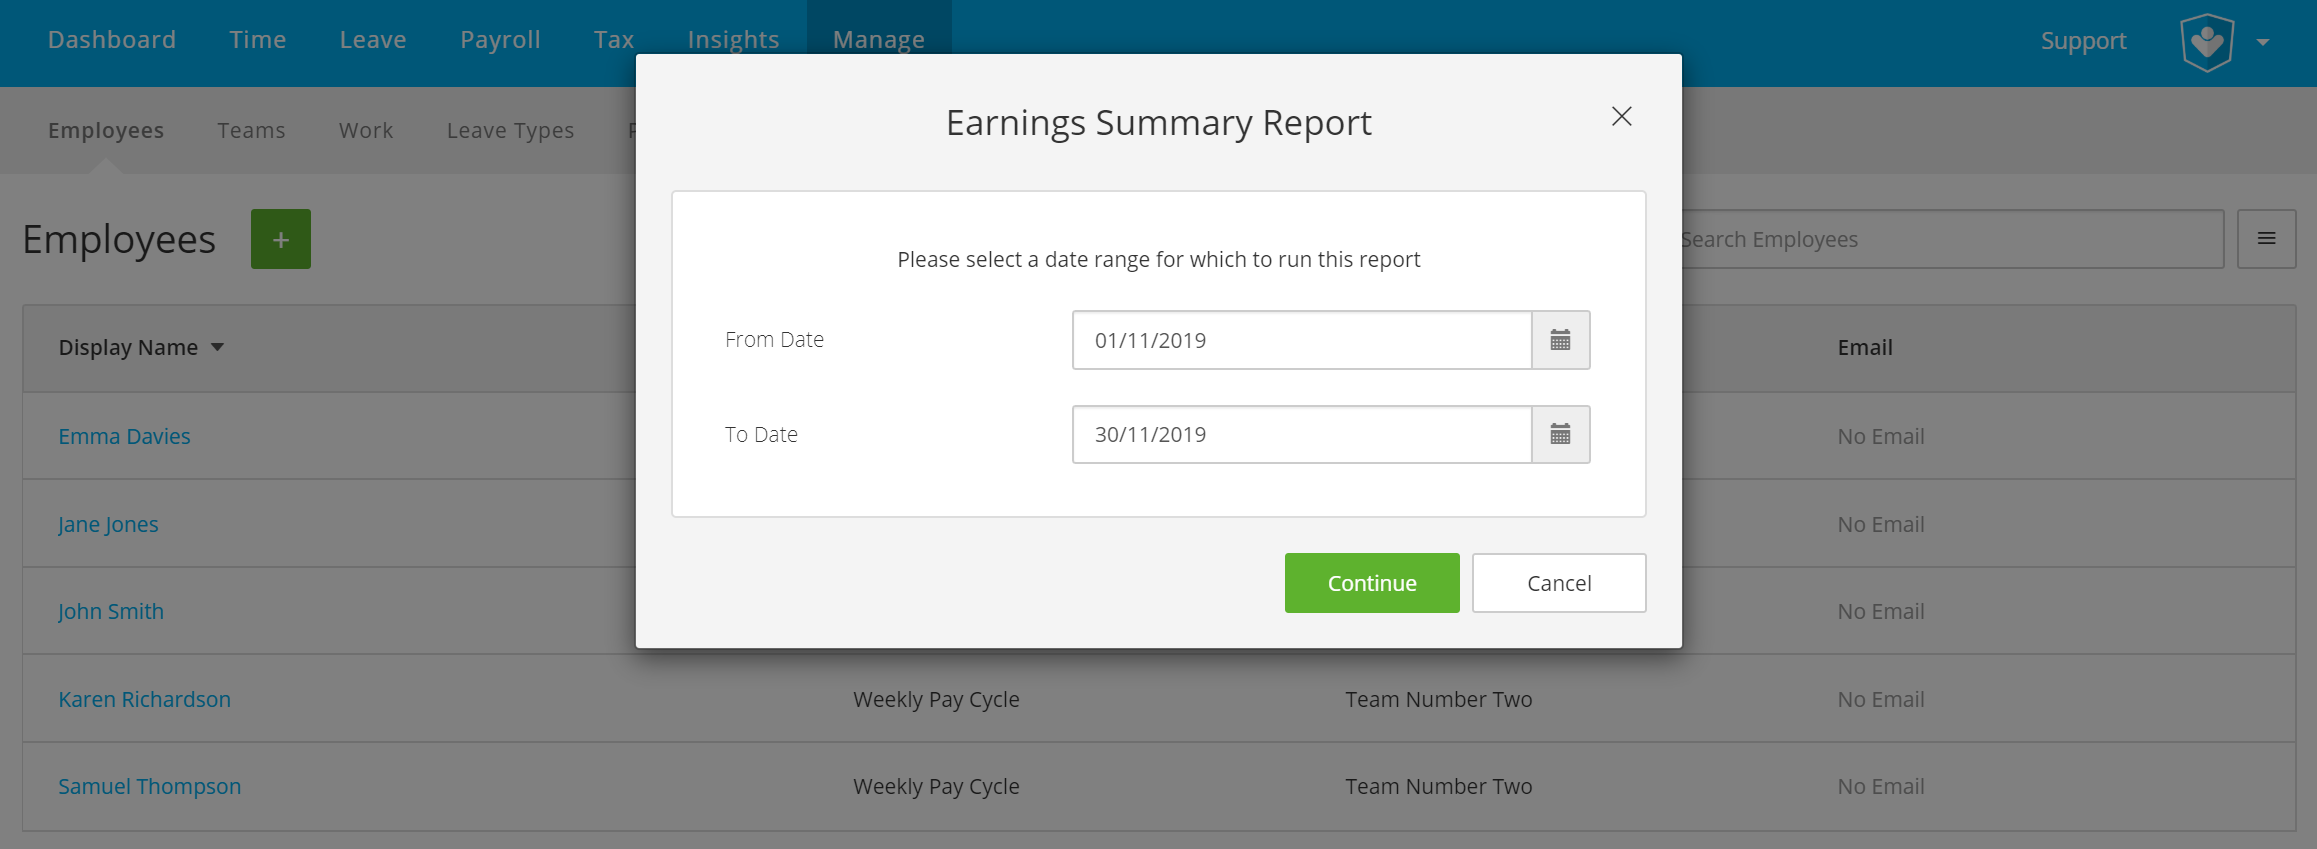 Earnings_Summary_Date_Range.png